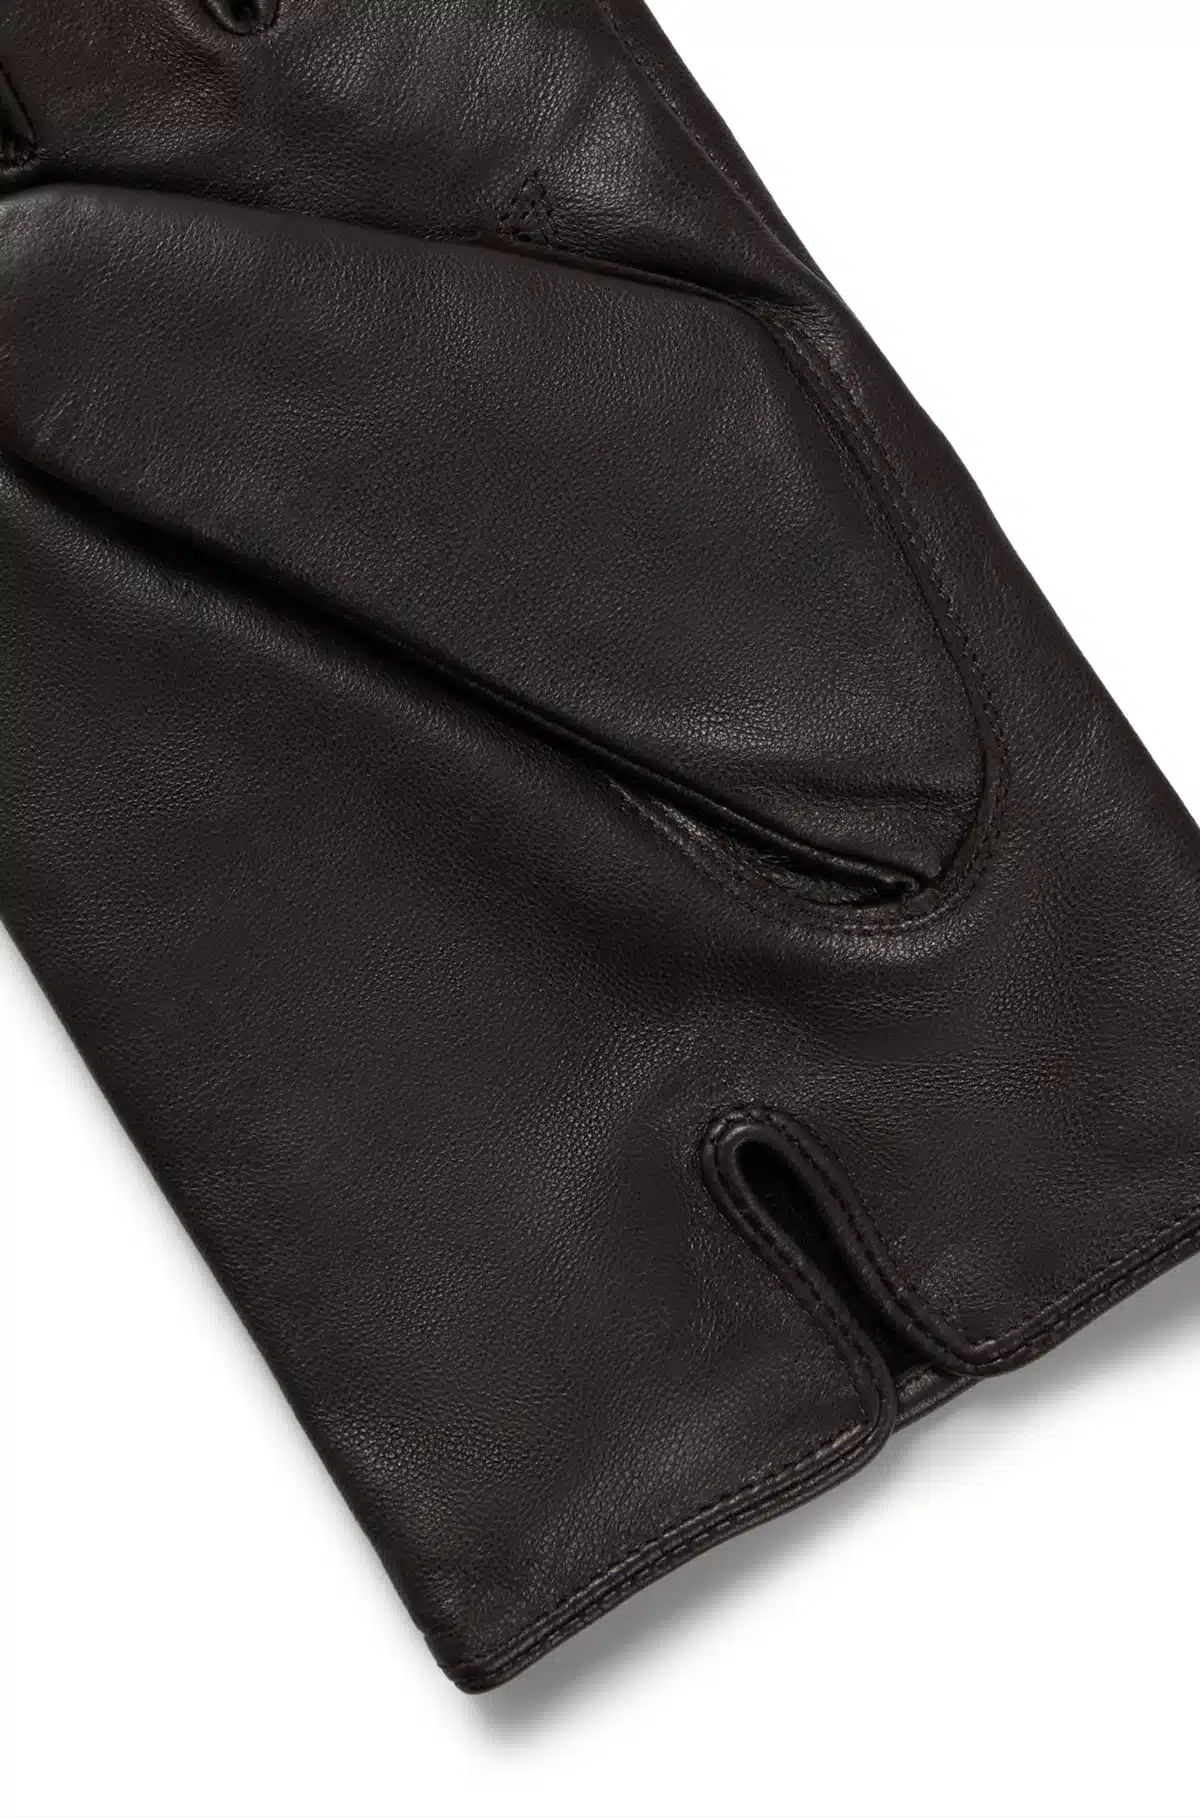 Buy Store Leather Fashion Hainz Brown Boss - Gloves Dark Scandinavian